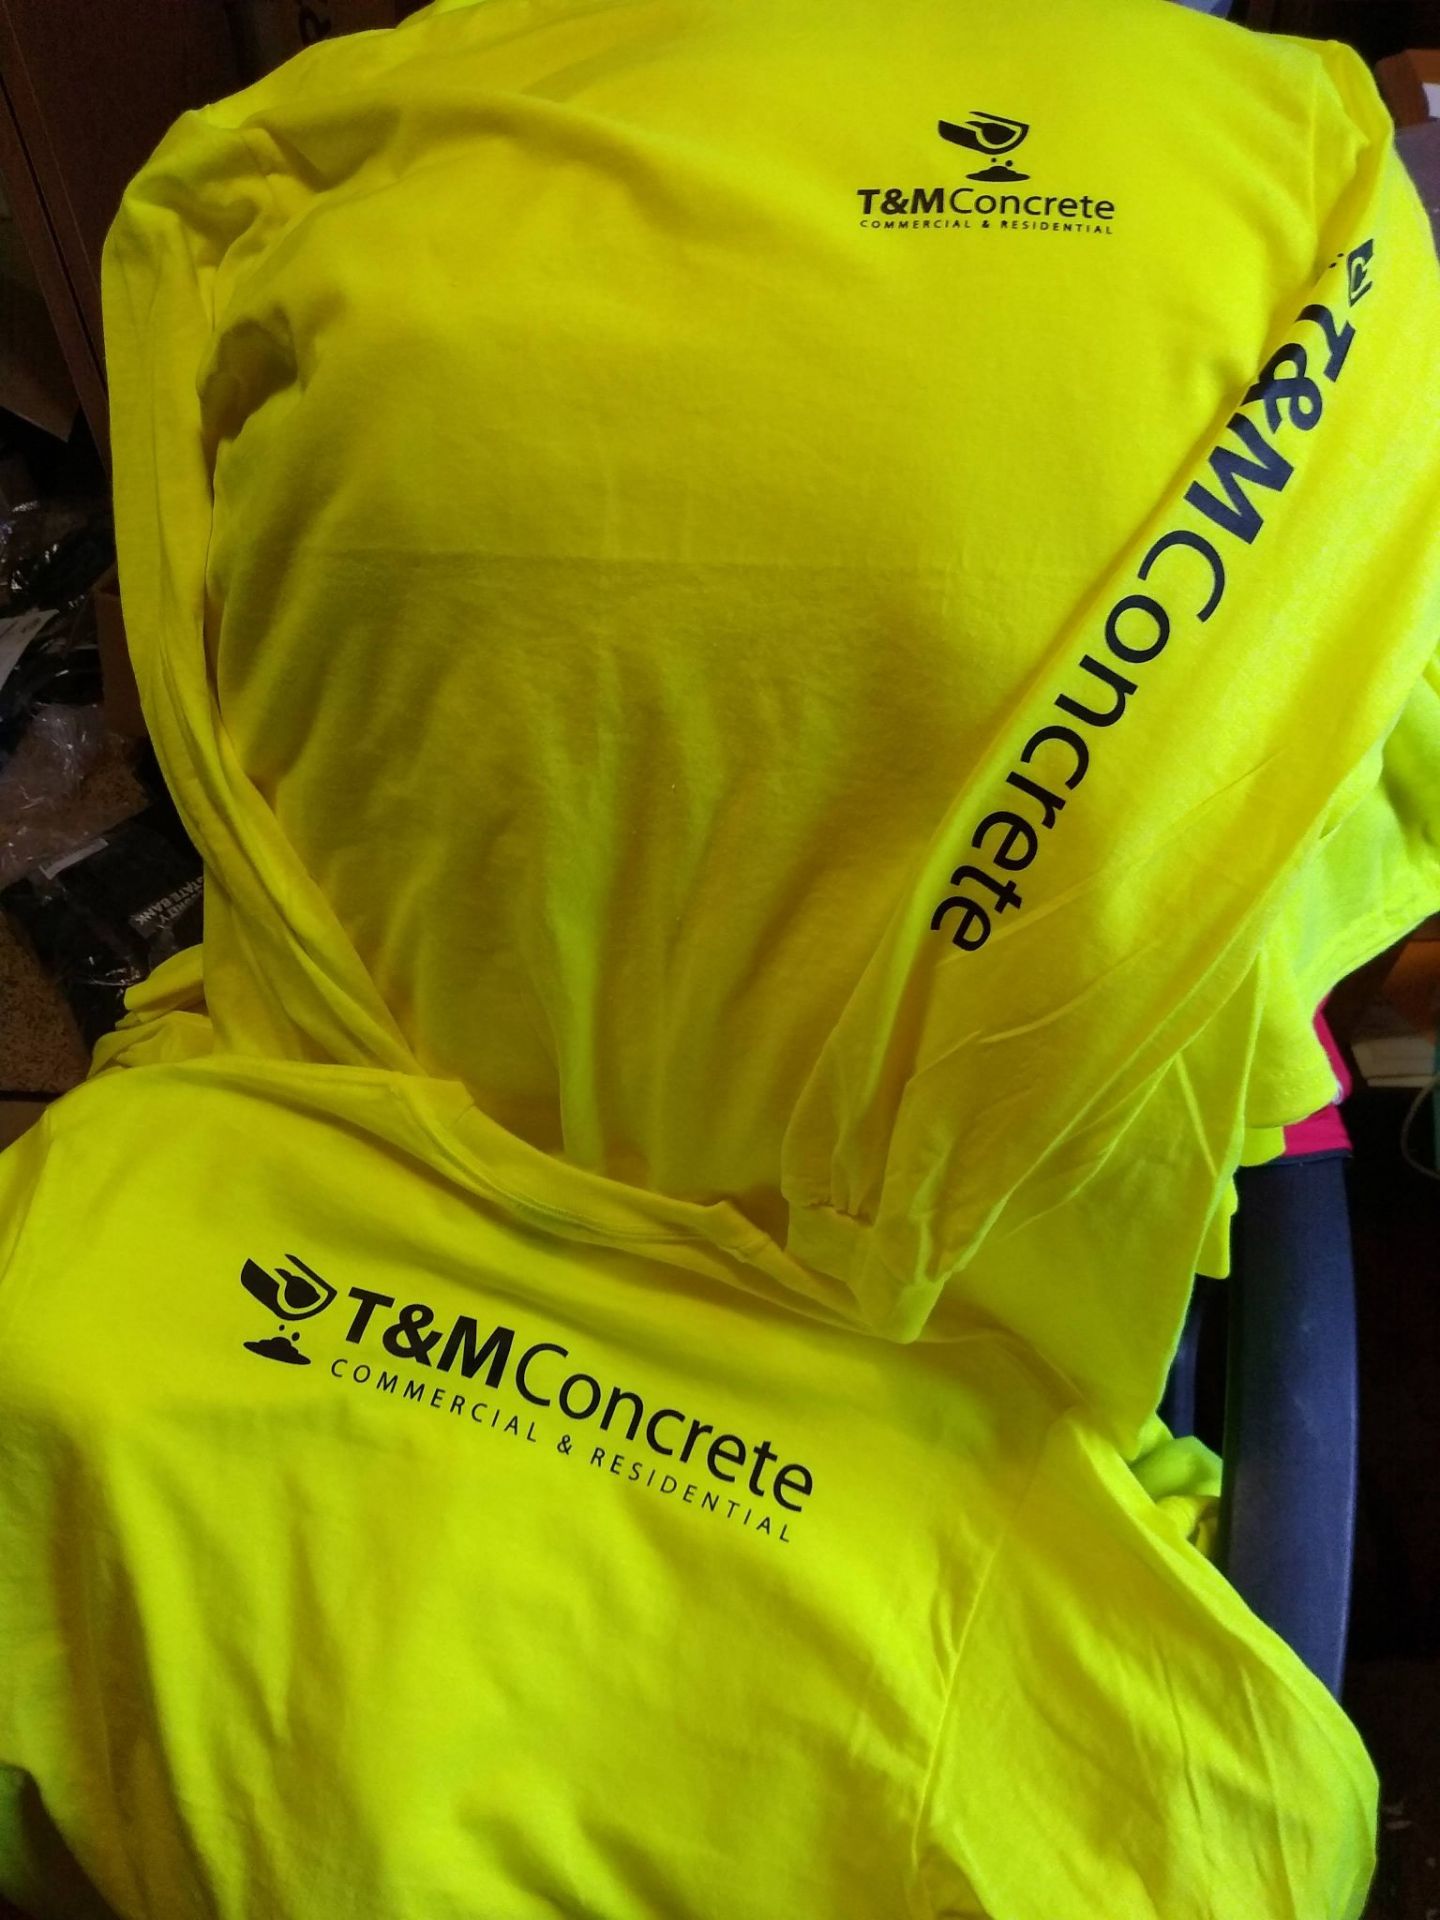 T&M Concrete high viz shirts